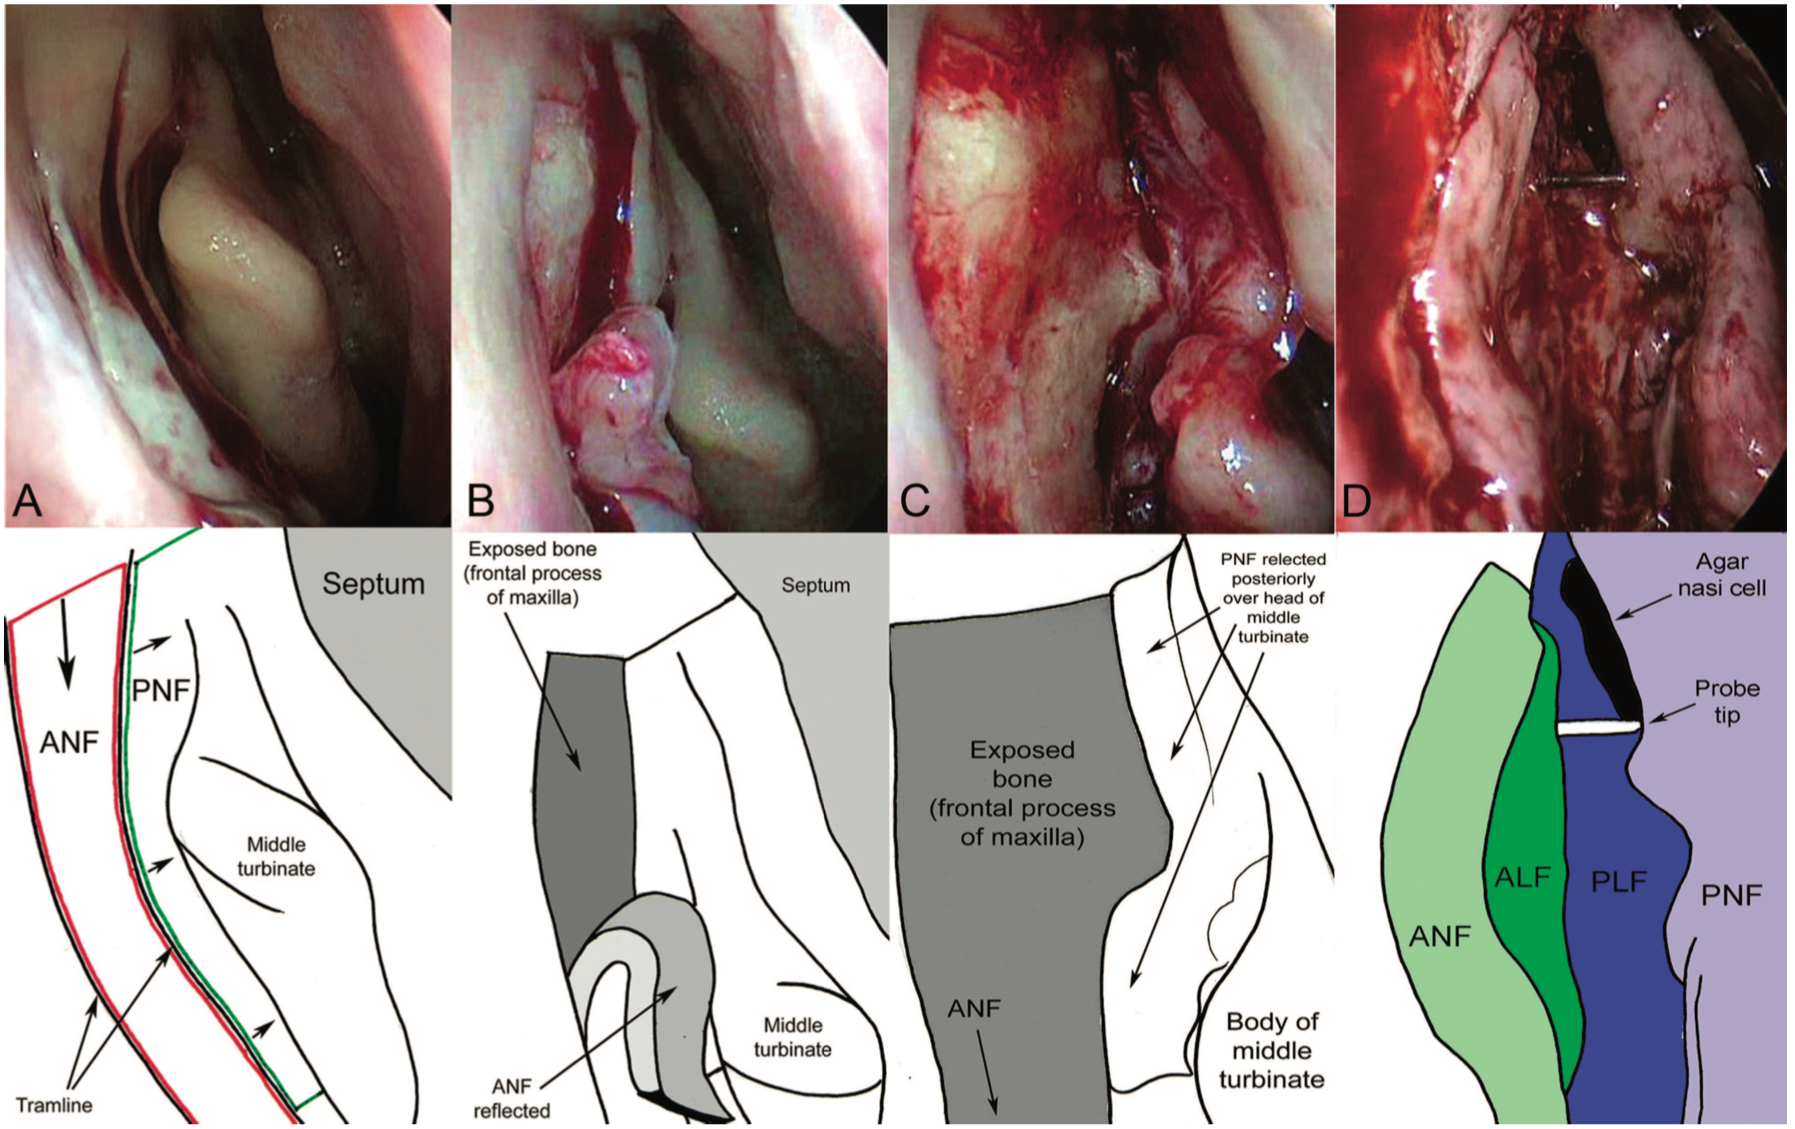 Creation of Mucosal Flaps in an Endoscopic Dacryocytorhinostomy: The right nasal cavity